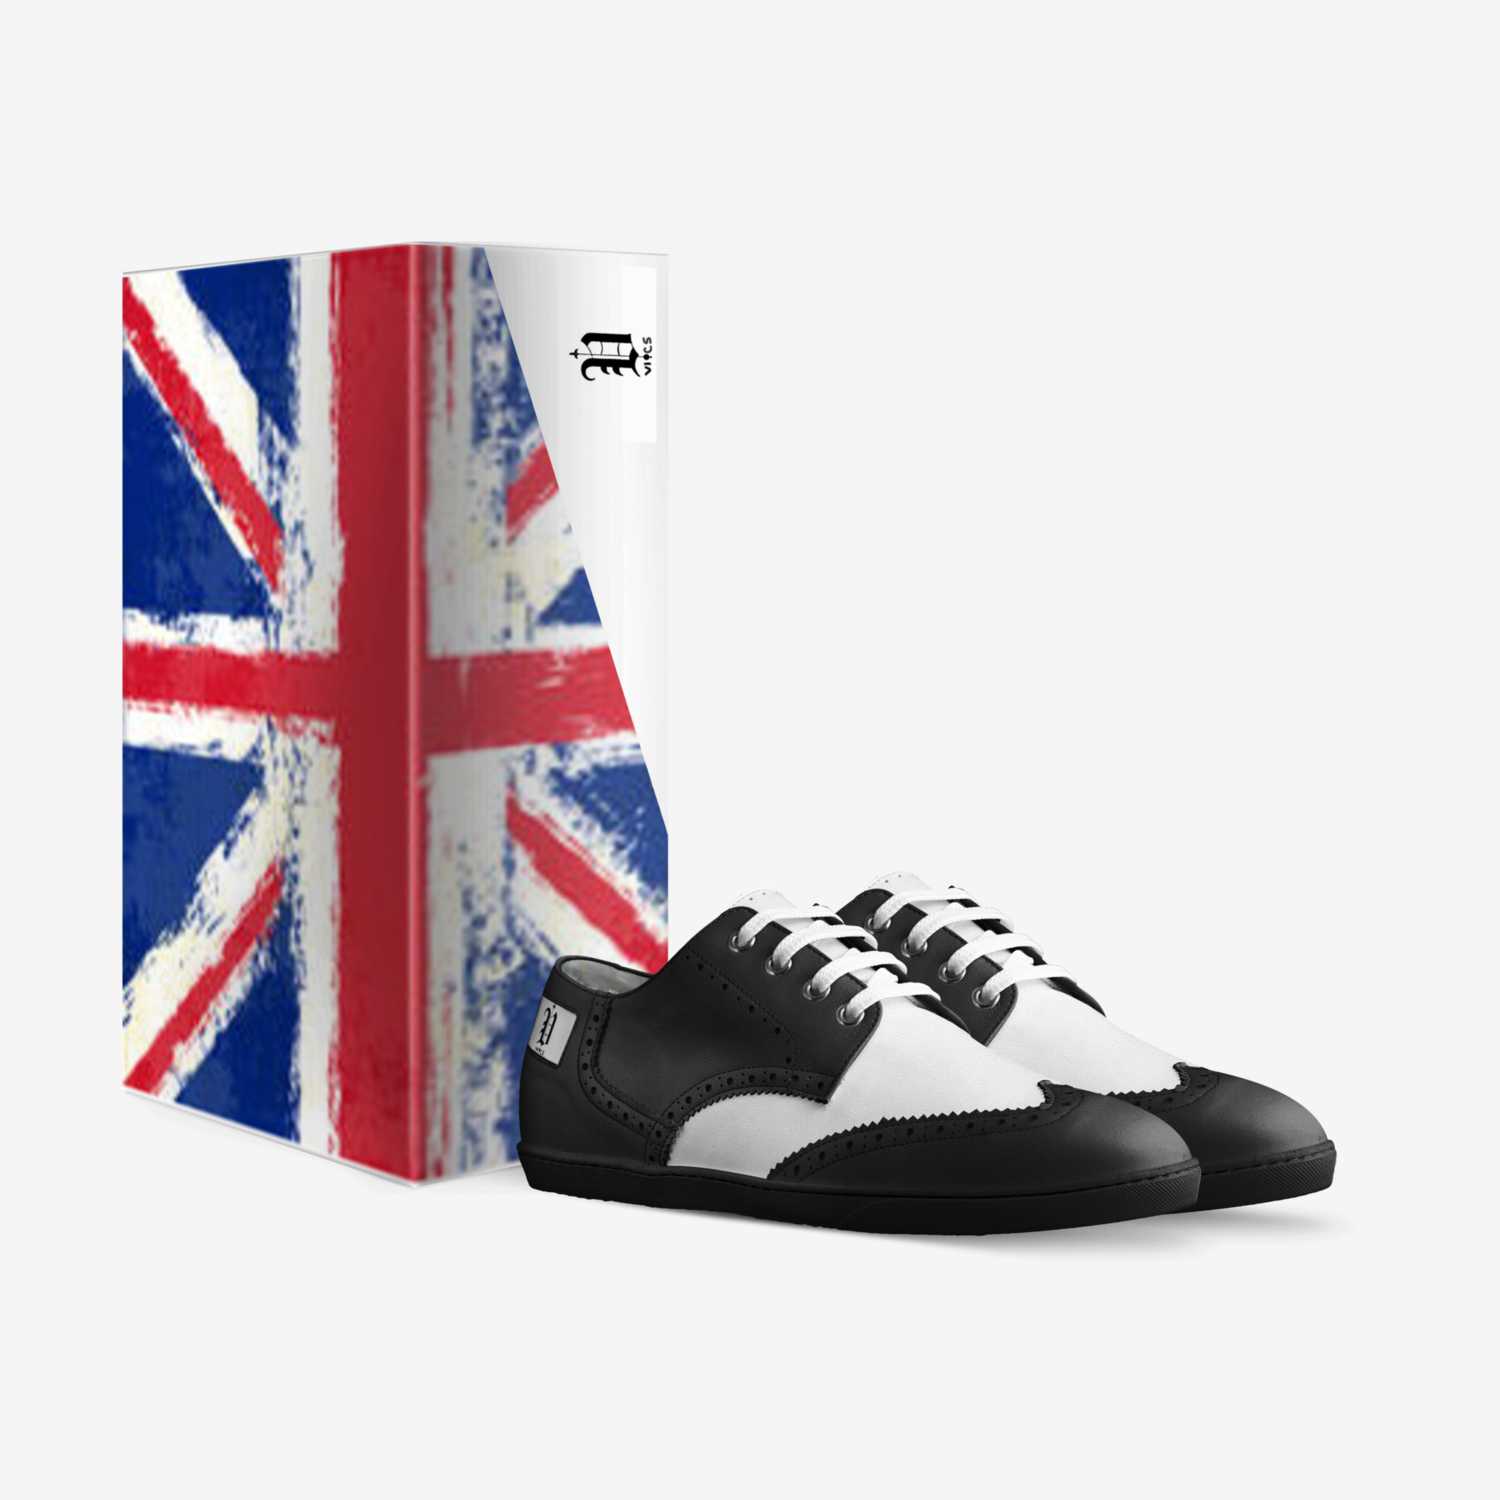 vics  serata custom made in Italy shoes by Brayden Murphy | Box view